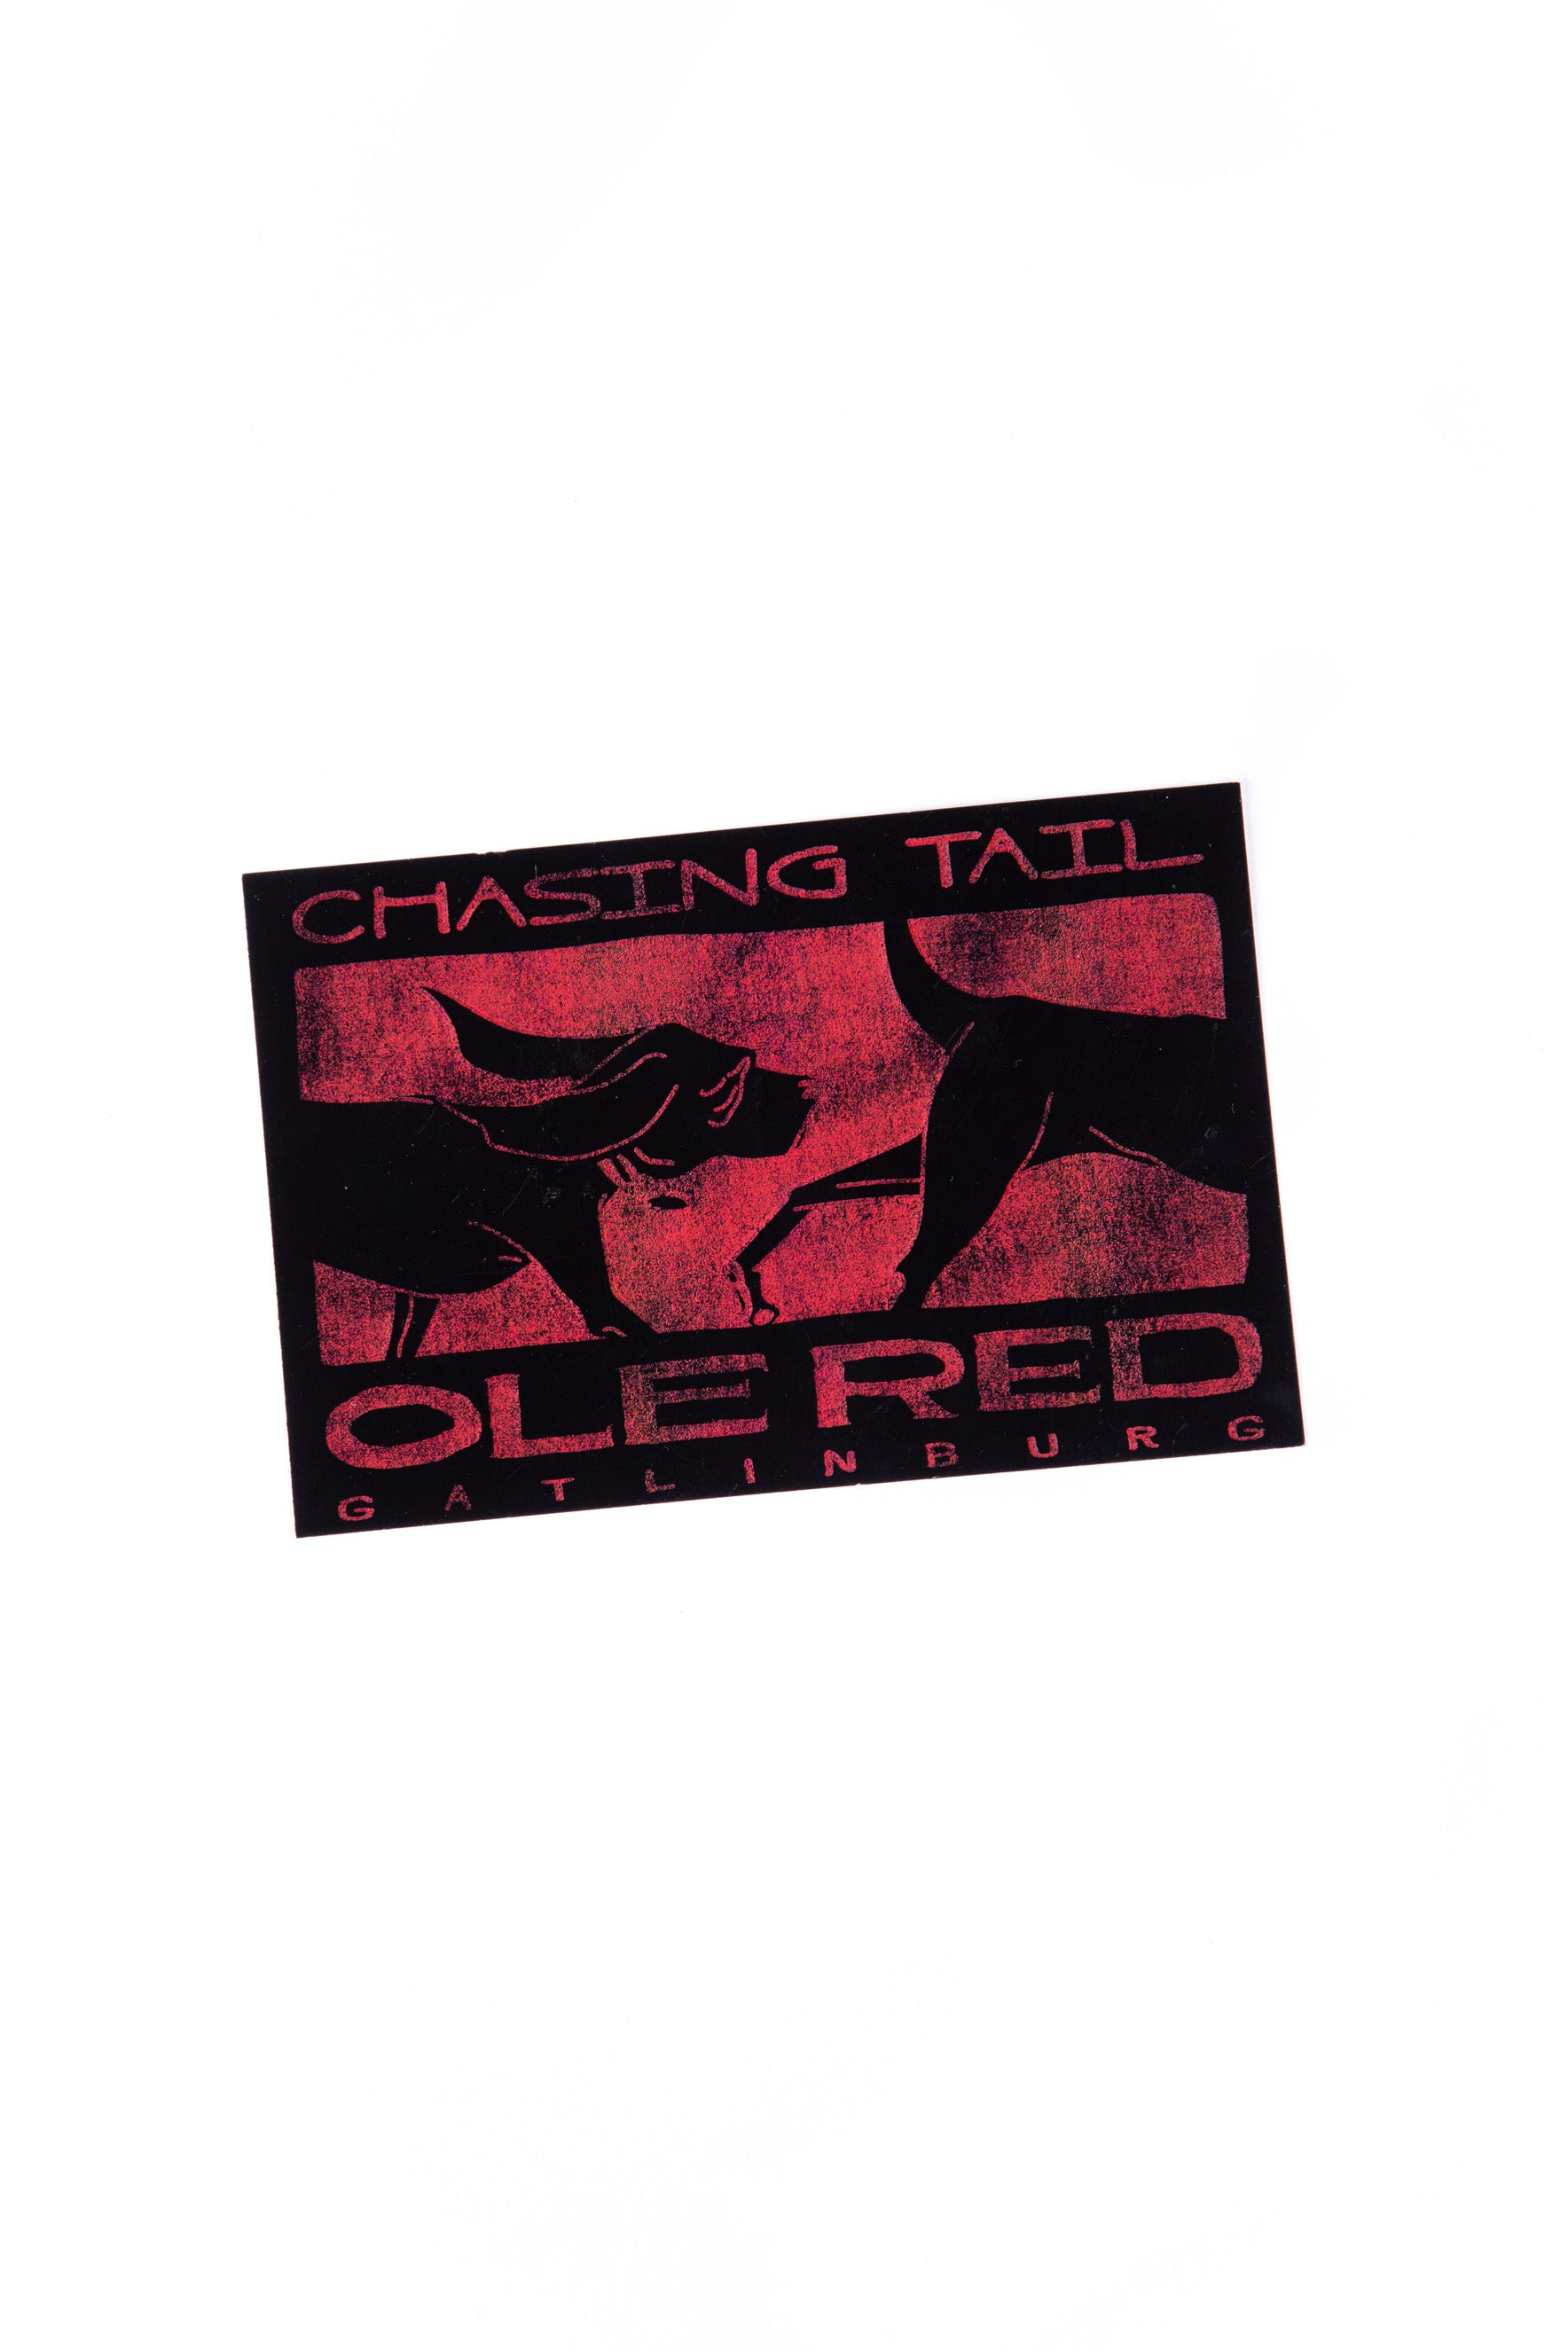 Ole Red Gatlinburg Chasin' Tail Postcard